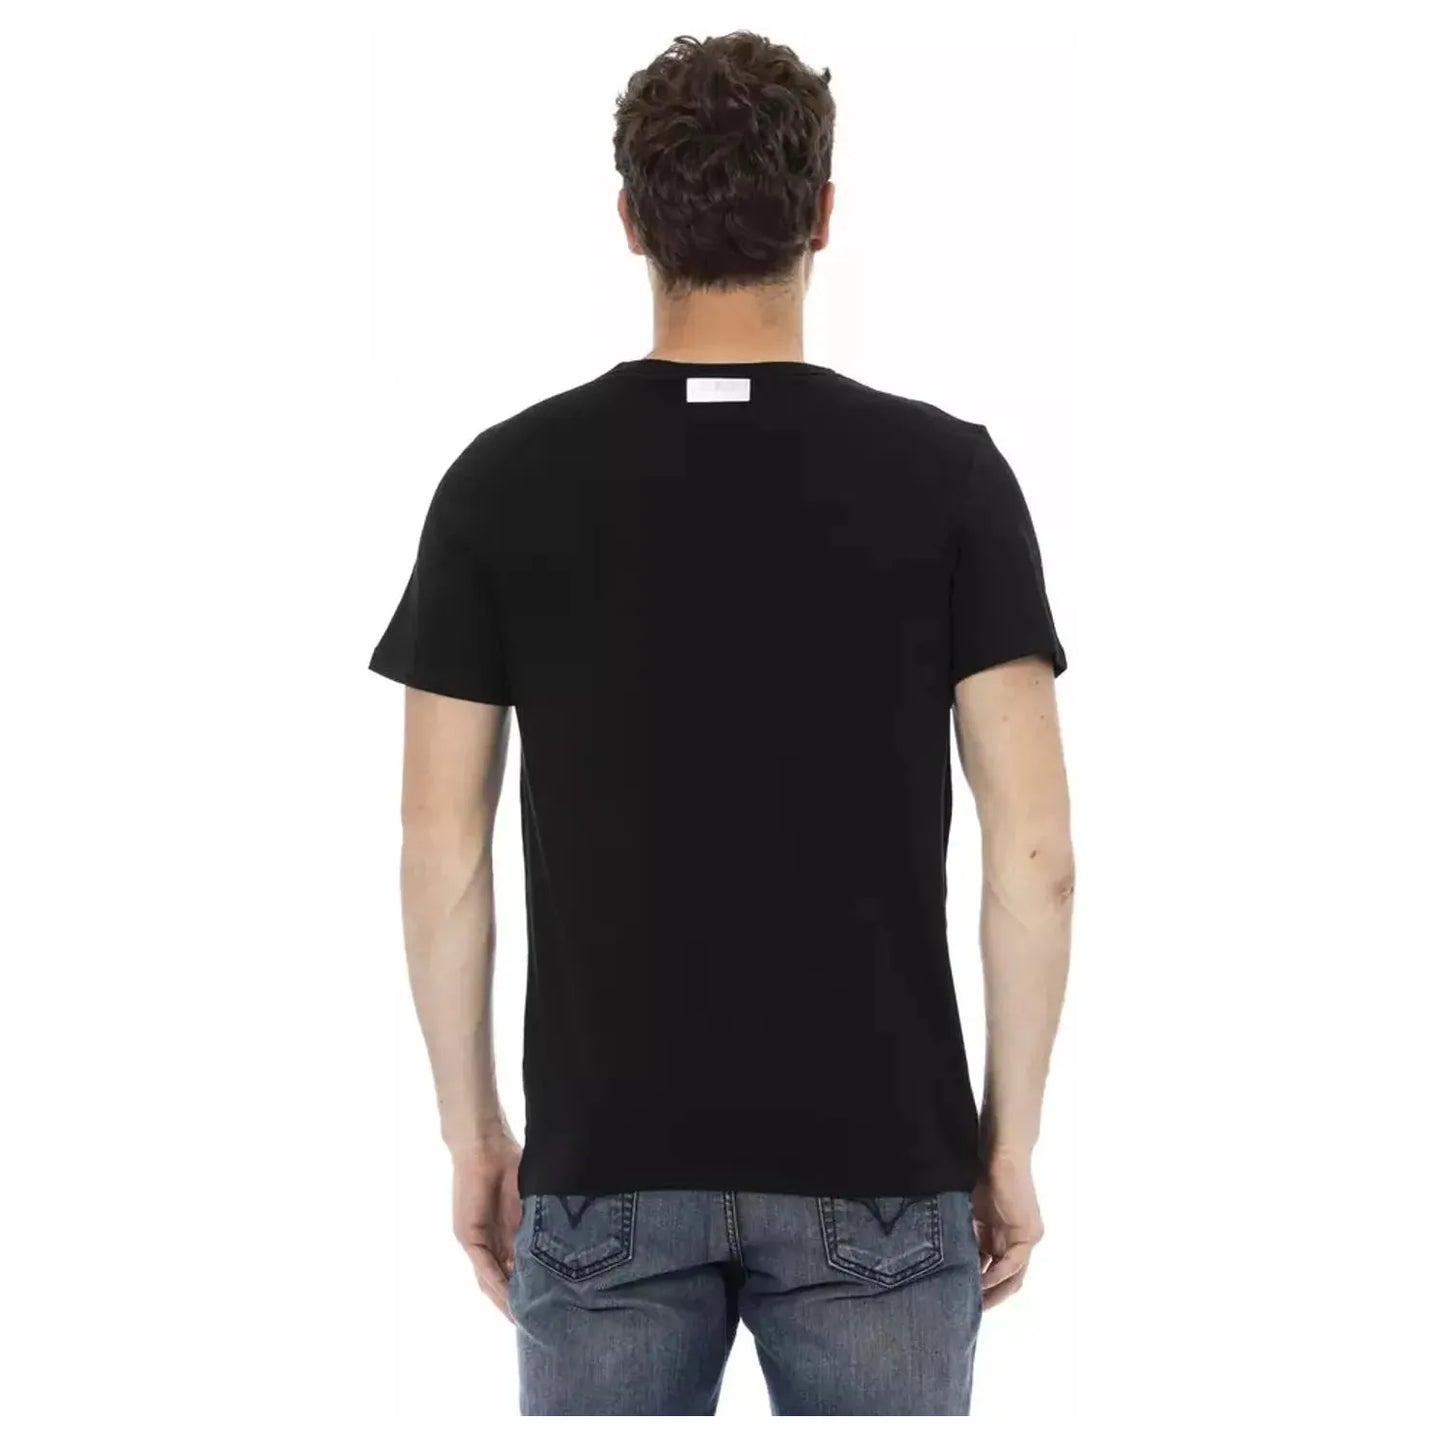 Bikkembergs Sleek Black Cotton Tee with Bold Front Print black-cotton-t-shirt-6